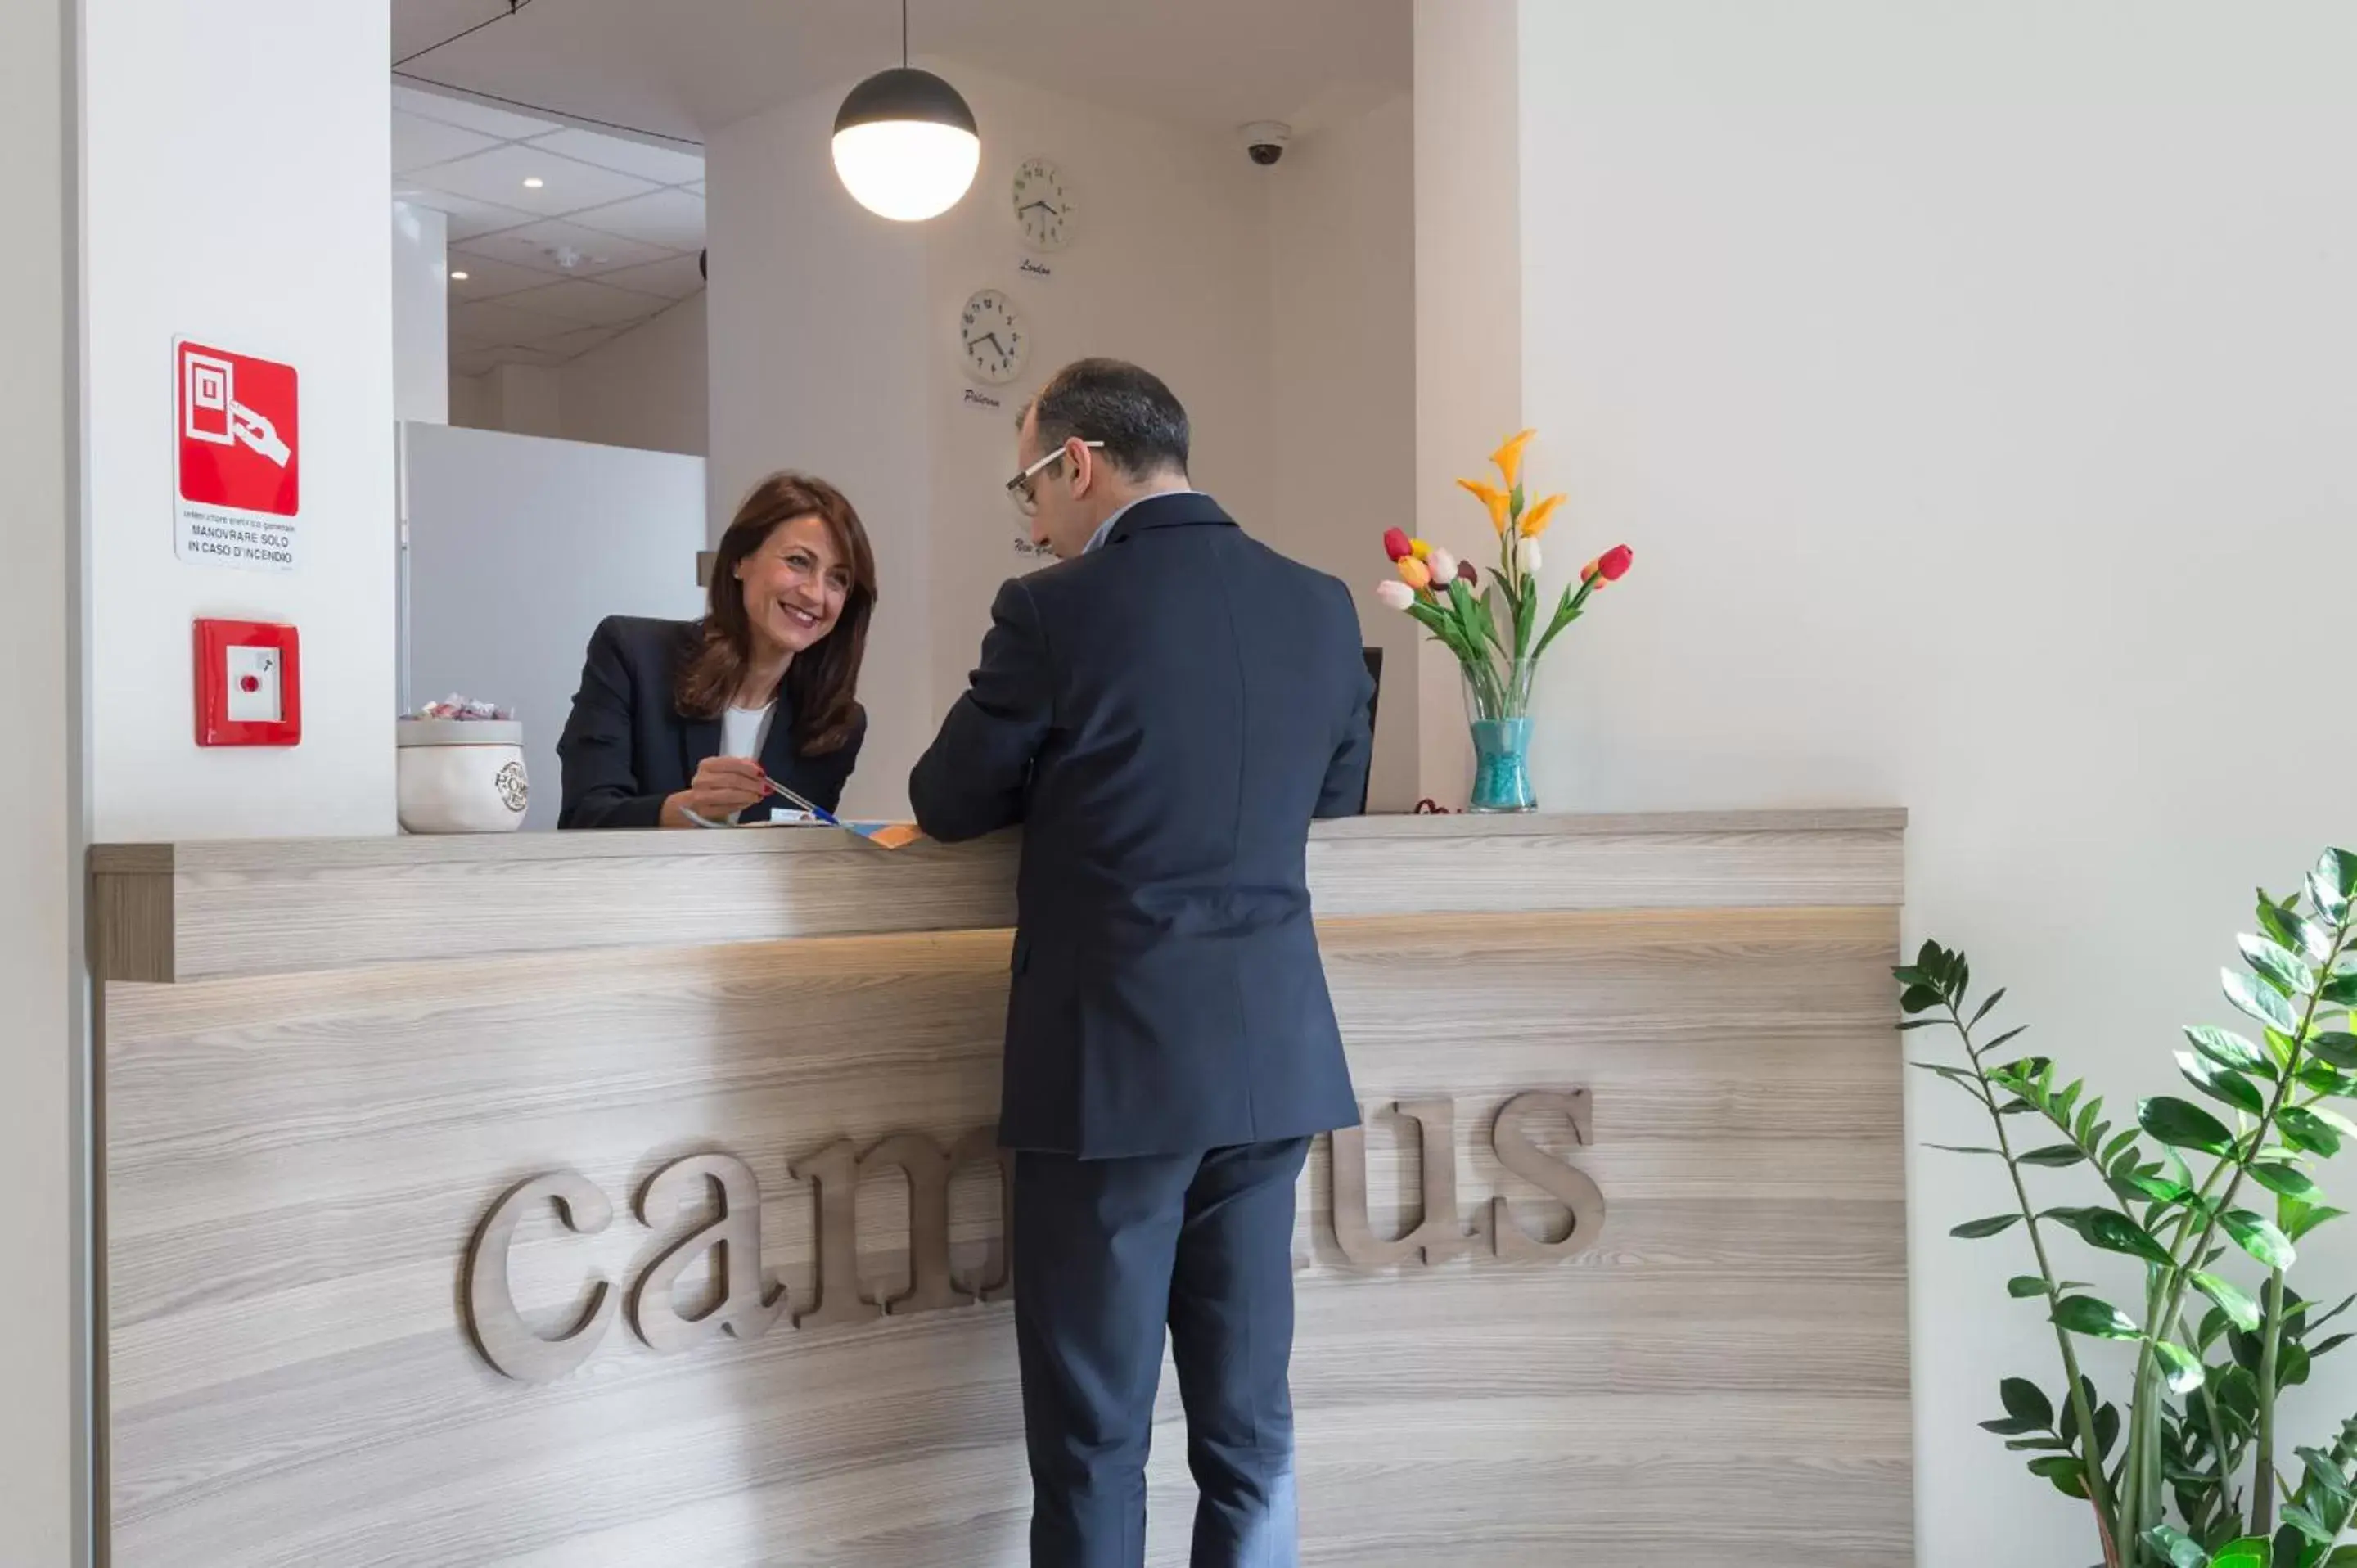 Staff in Camplus Guest Palermo